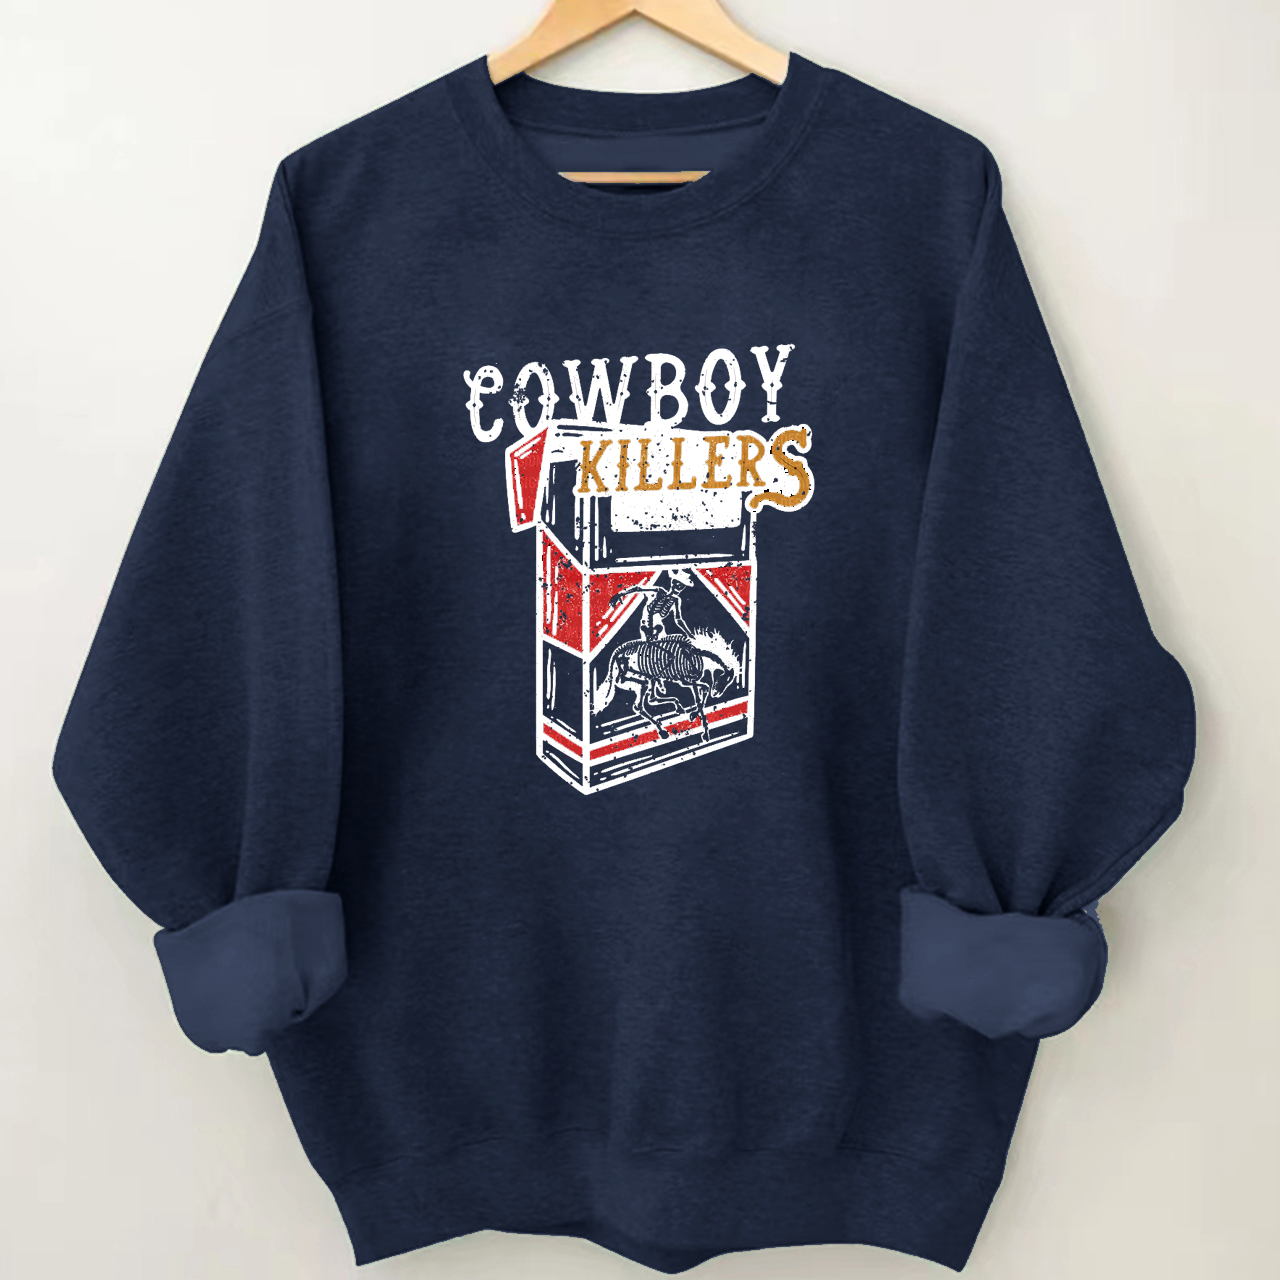 Cowboy killers Double sided printing Sweatshirt